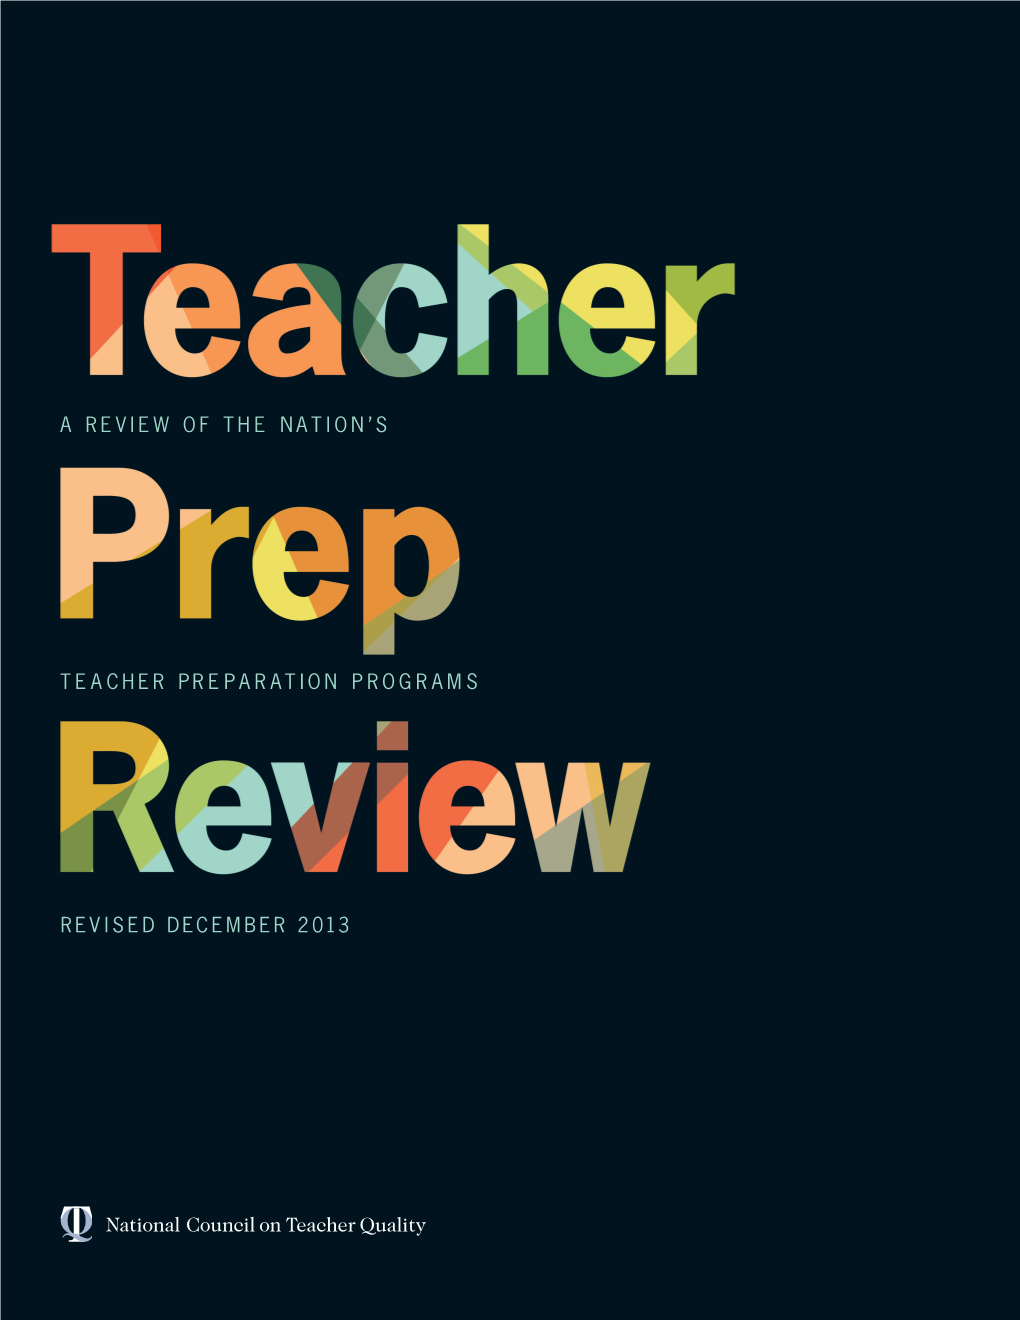 Teacher Prep Review Can Be Retrieved At